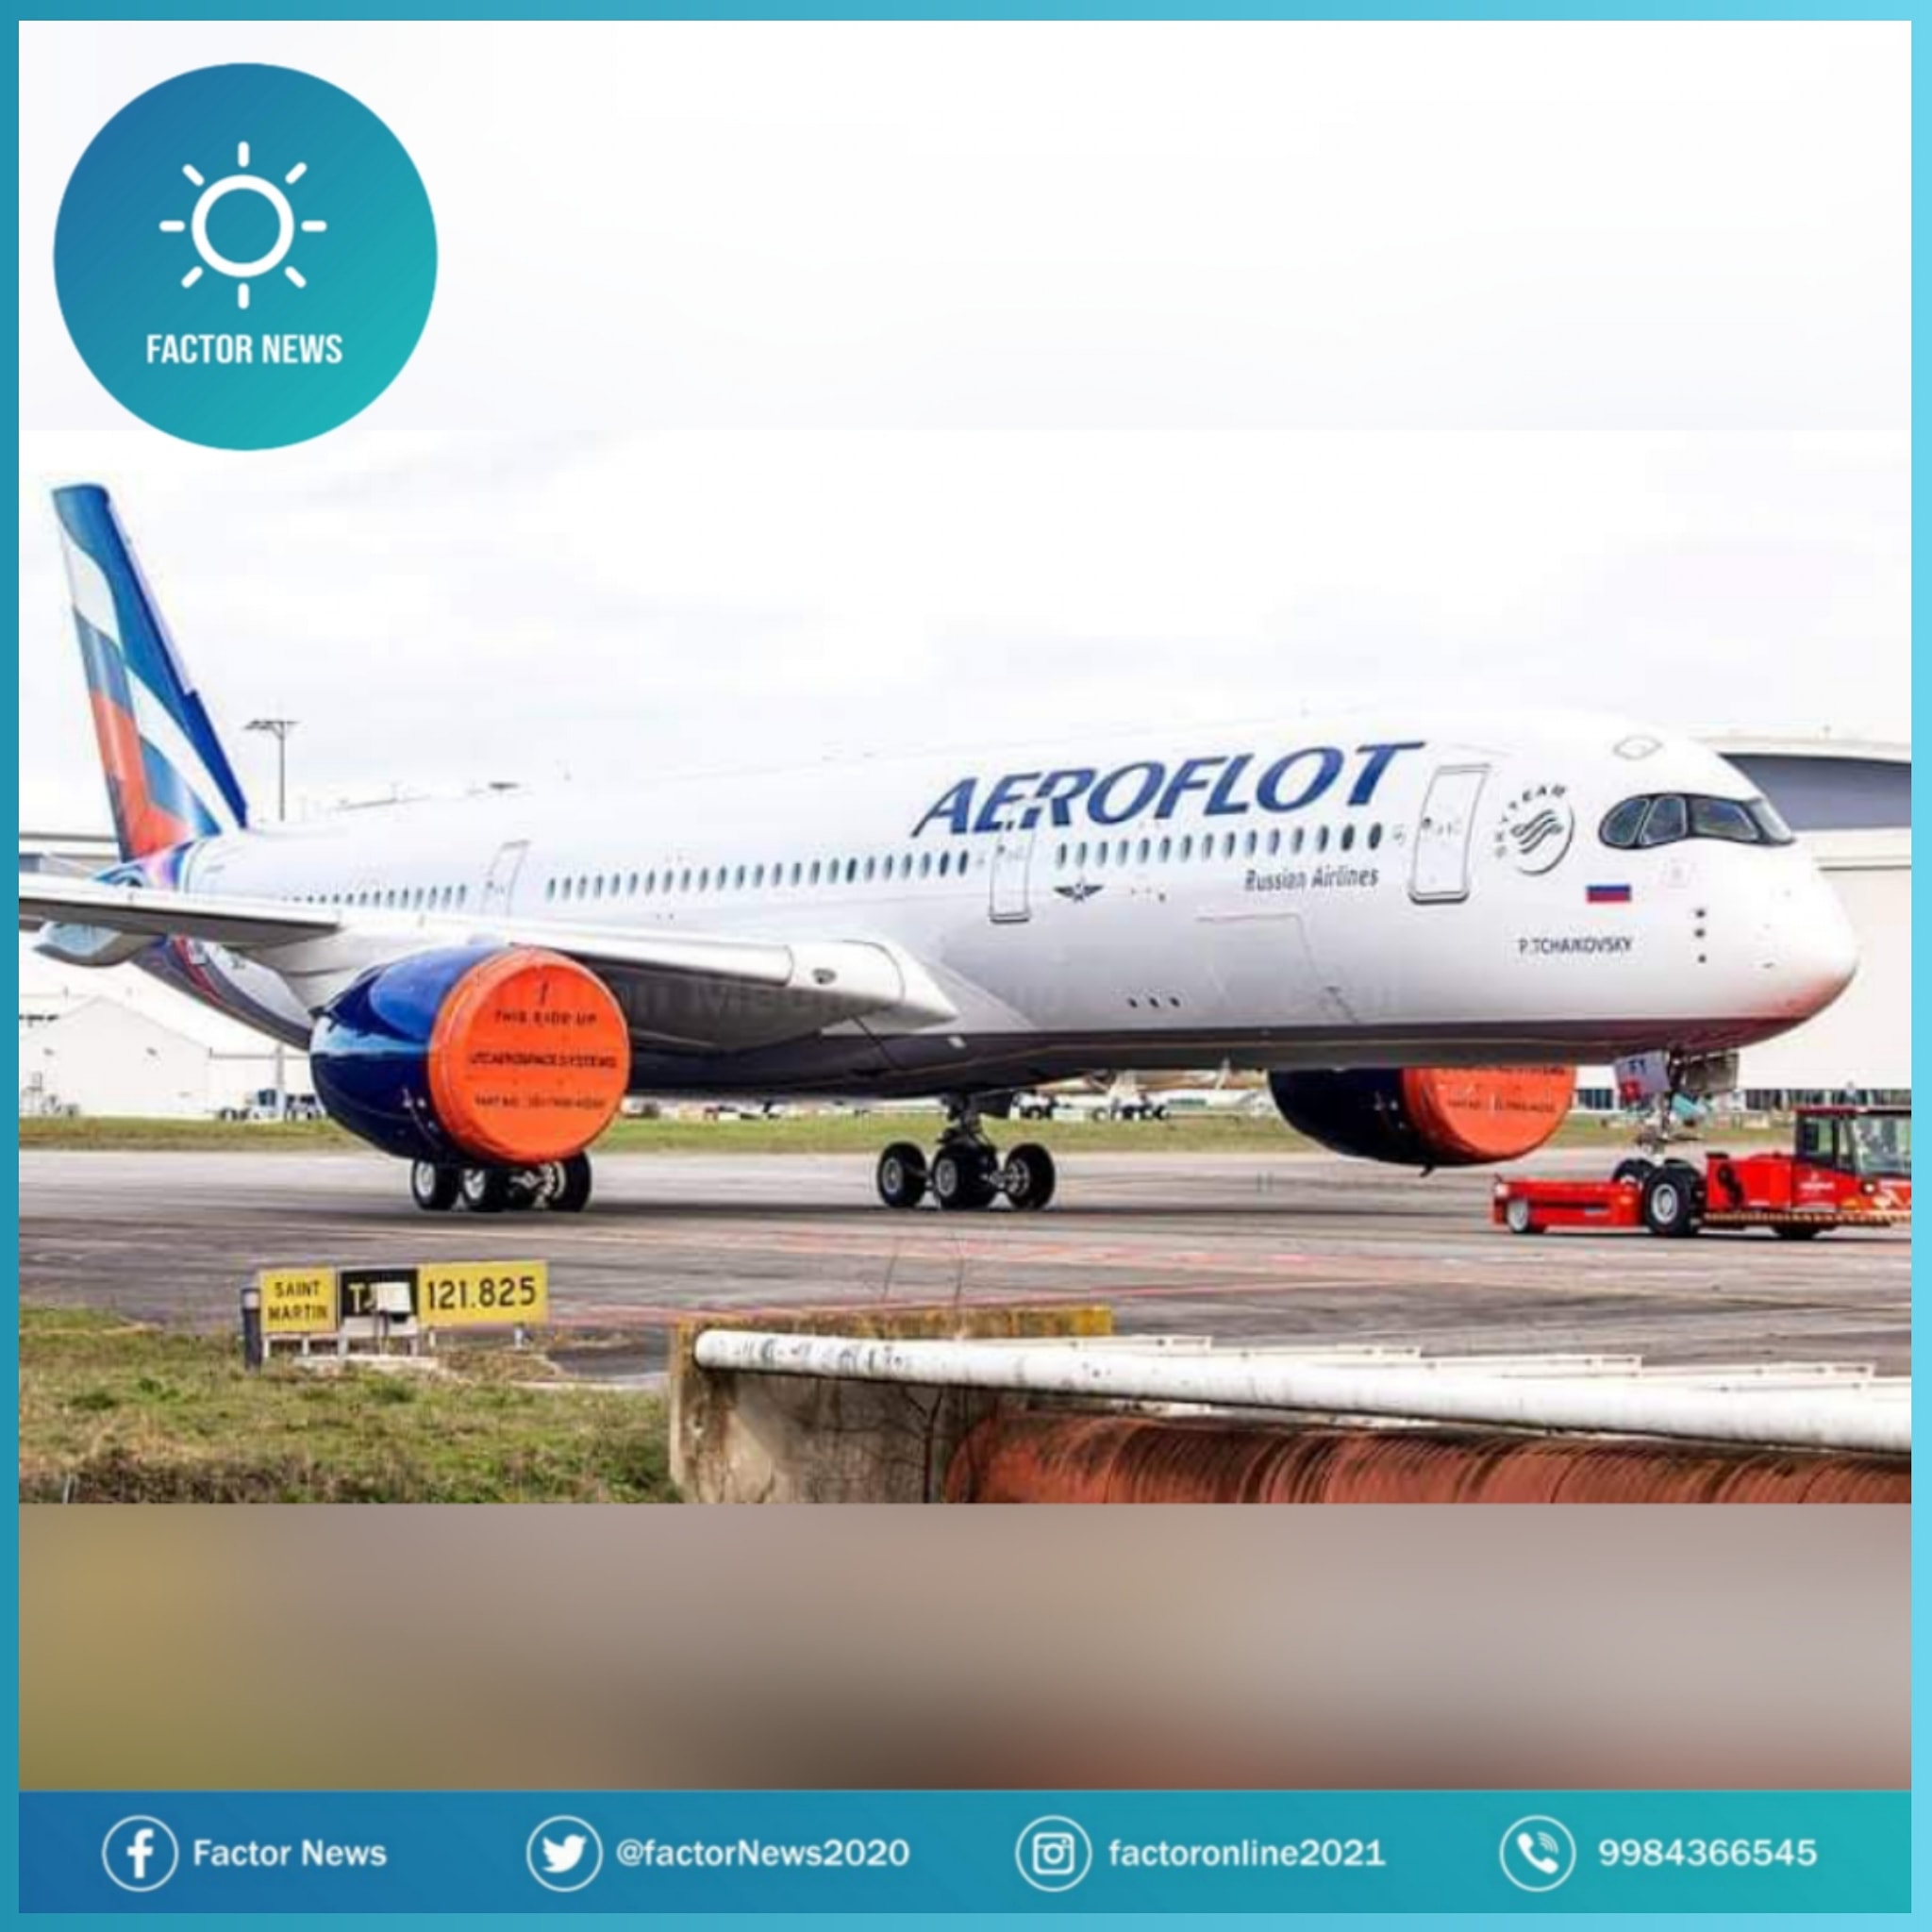 Moscú anuncia vuelos a Cancún con la aerolínea Aeroflot.